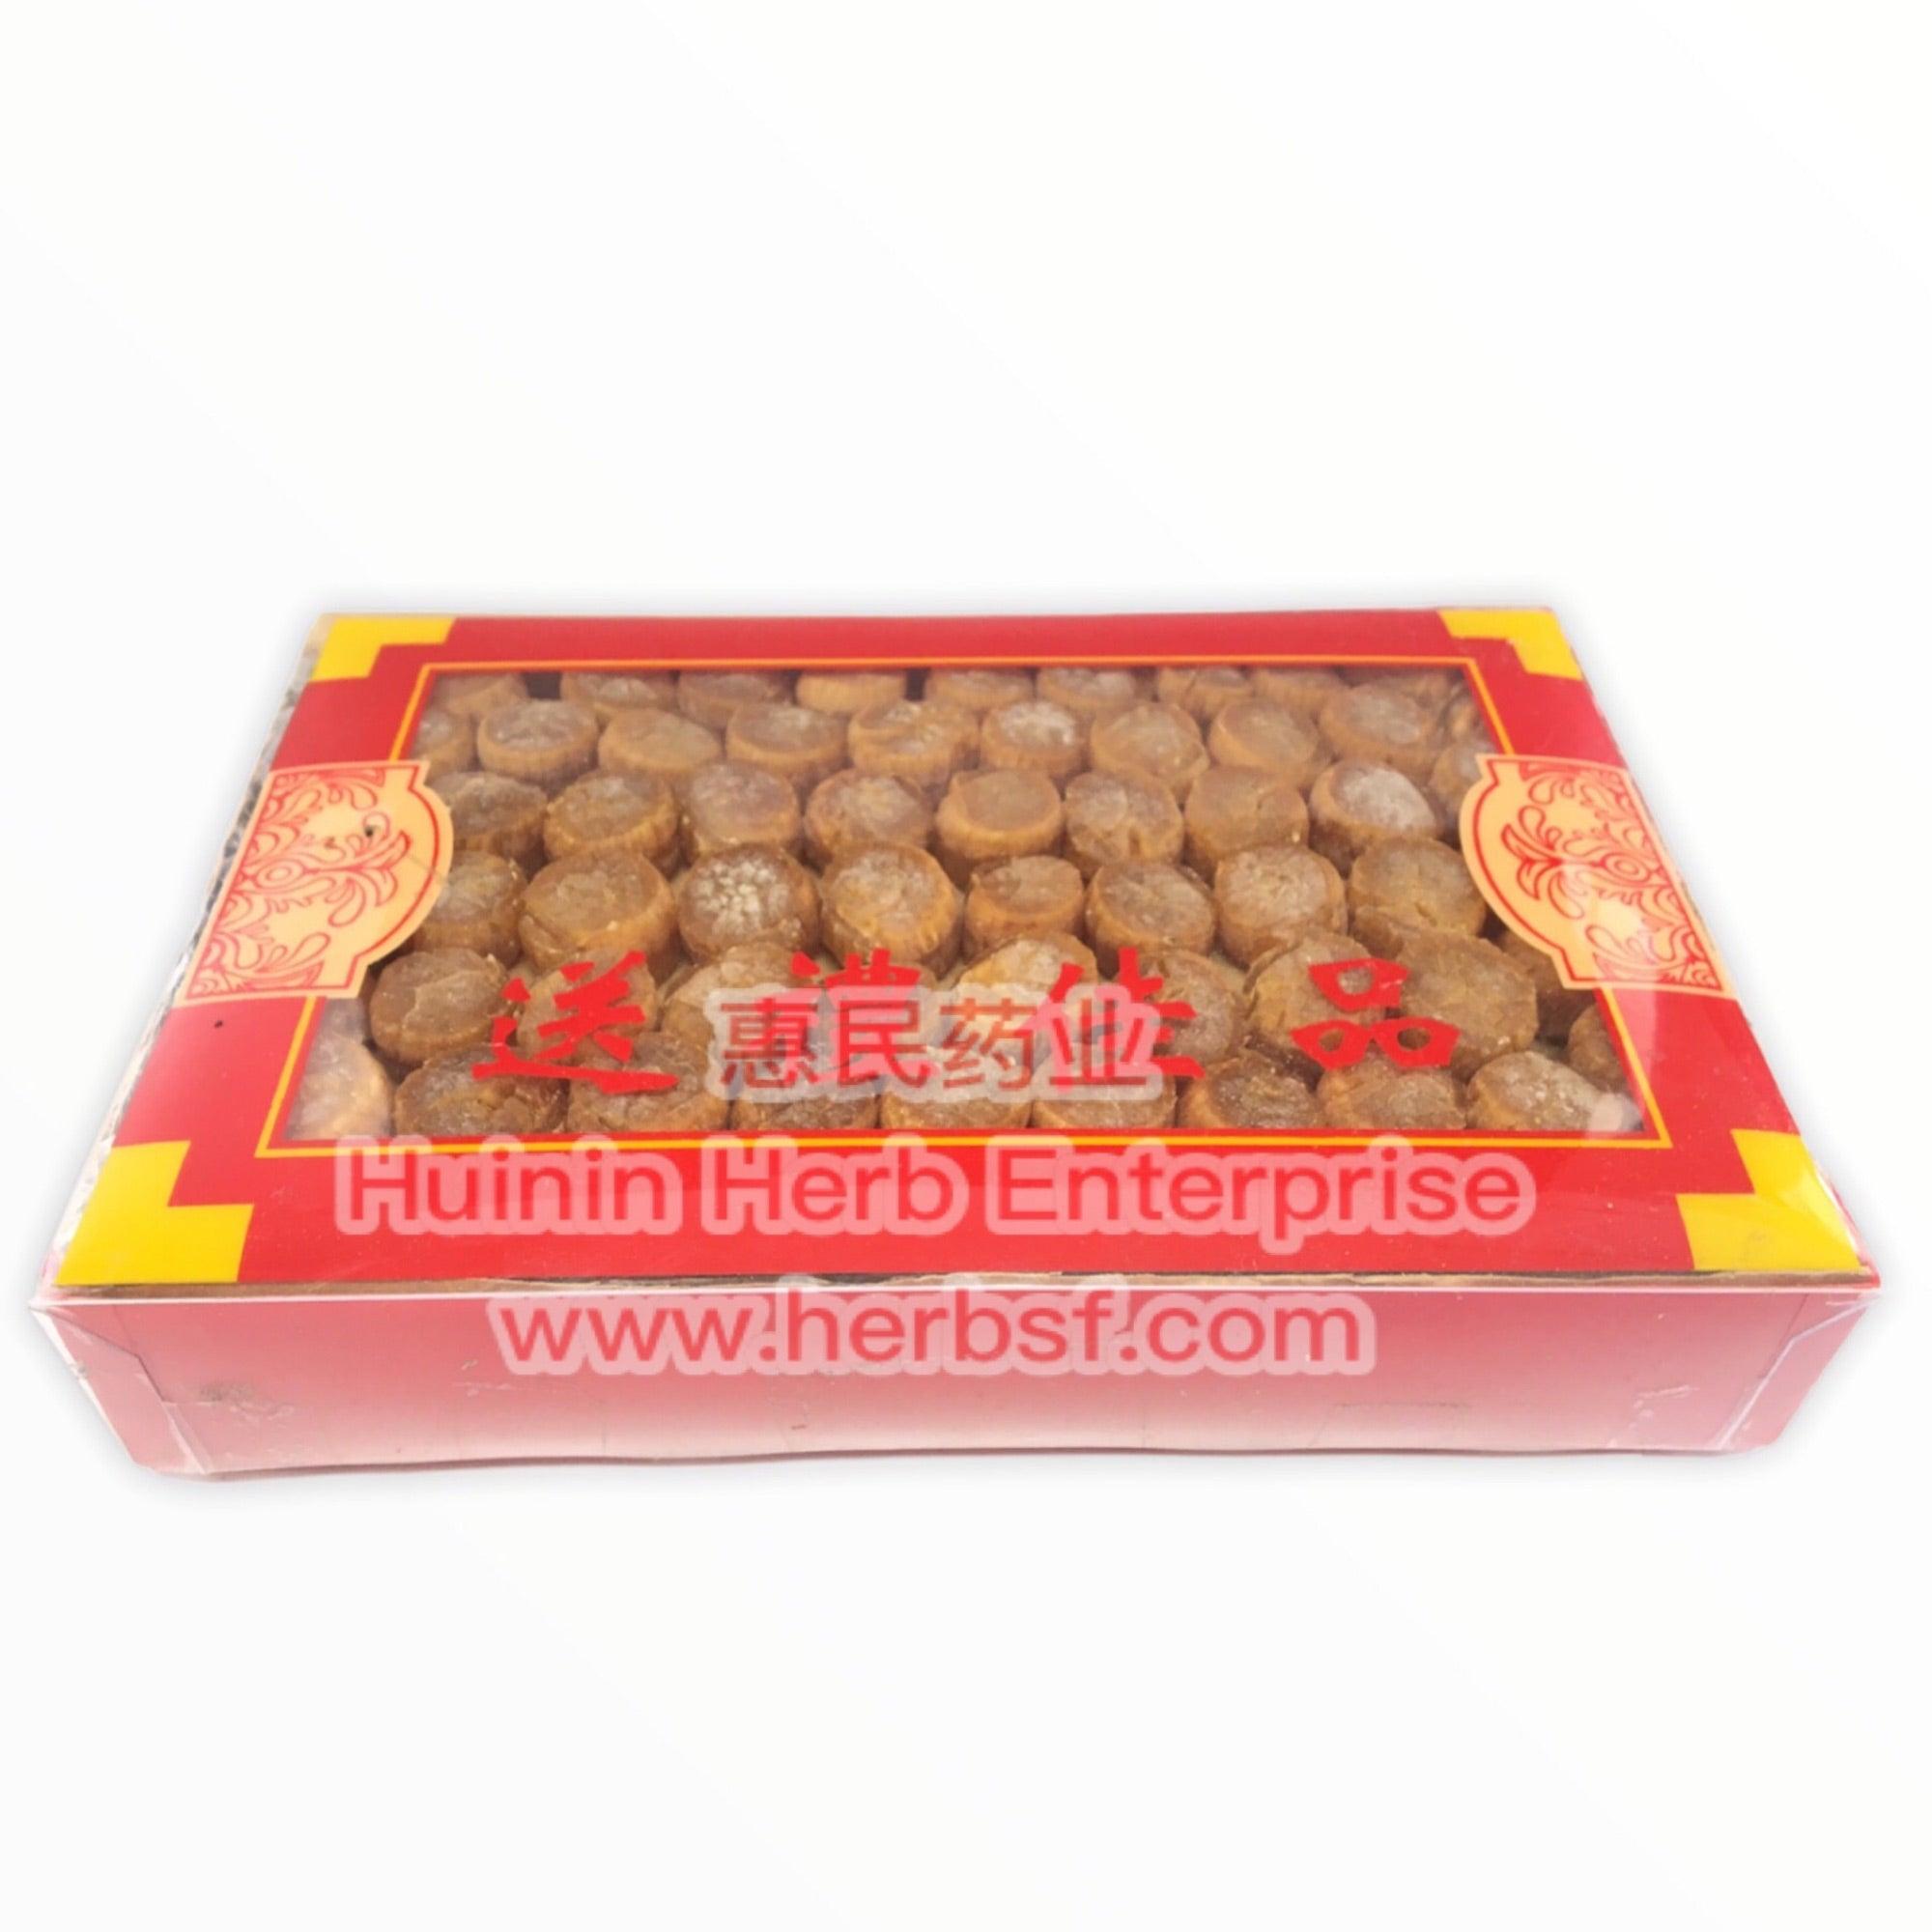 Scallop - Huimin Herb Online, LLC